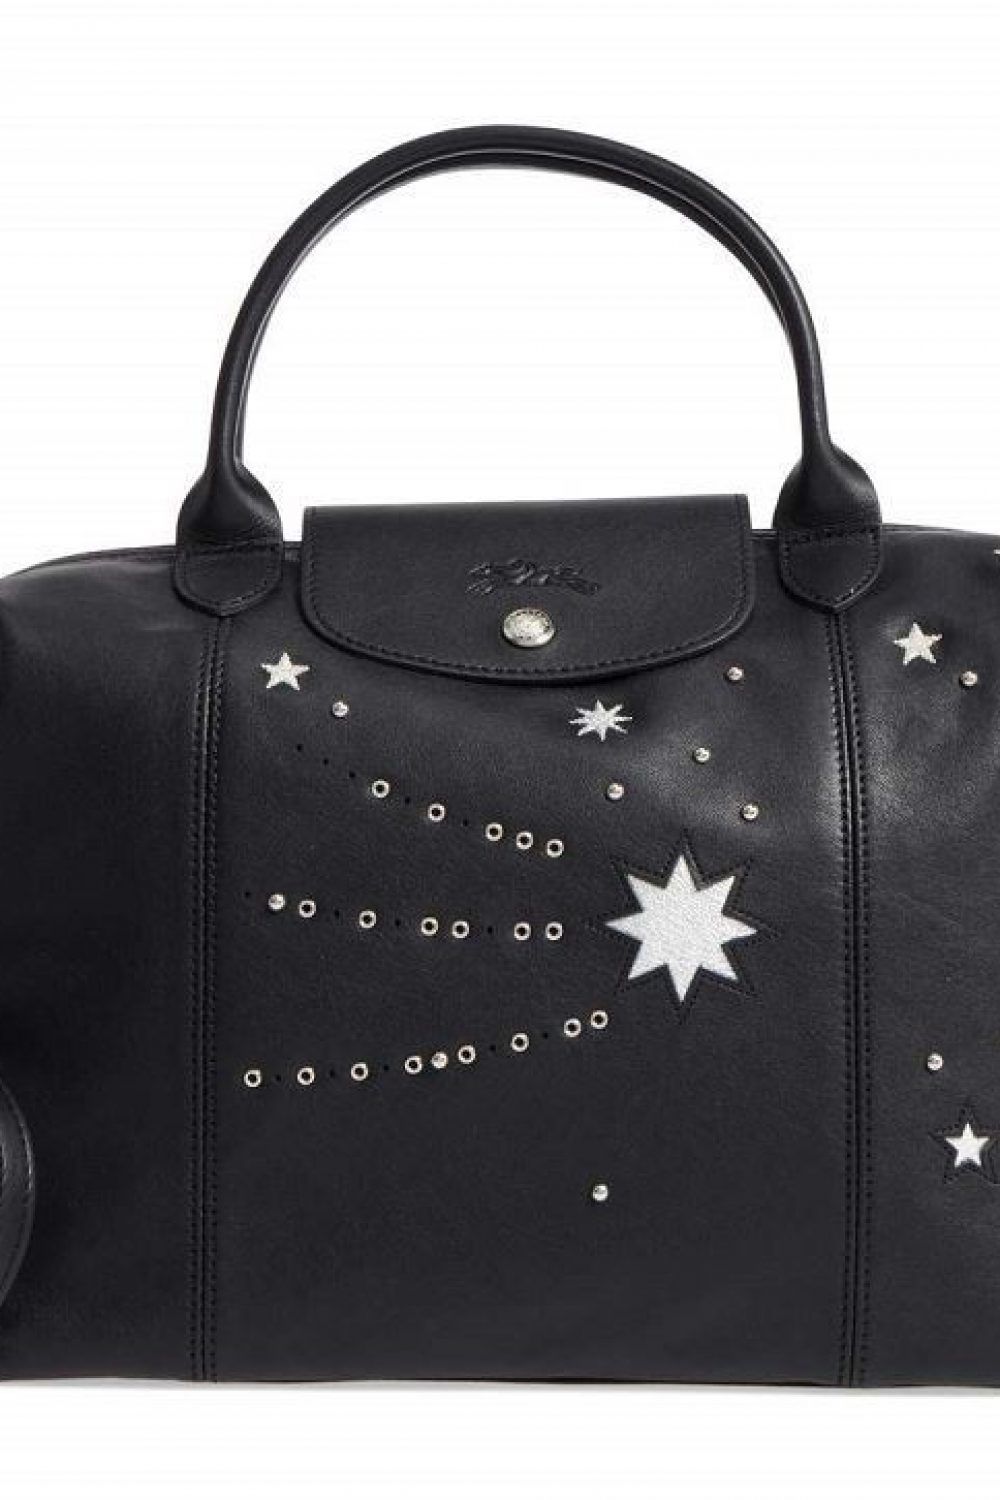 Longchamp star bag